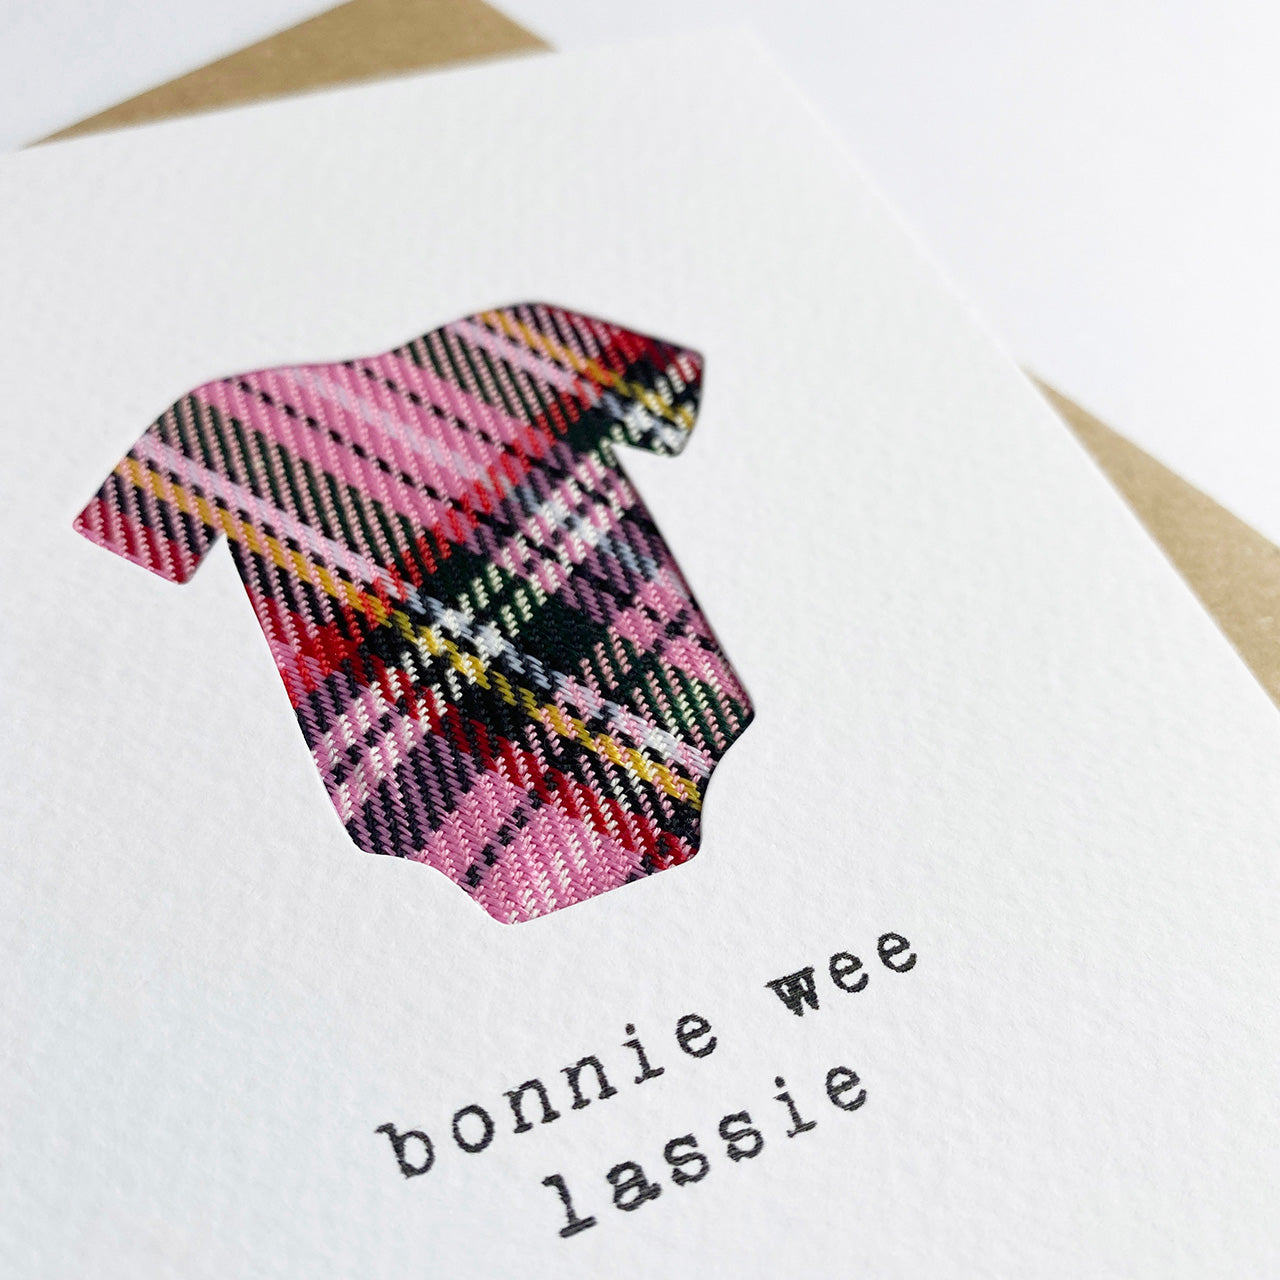 'Bonnie Wee Lassie' Scottish Baby Card with Tartan - HiyaPal